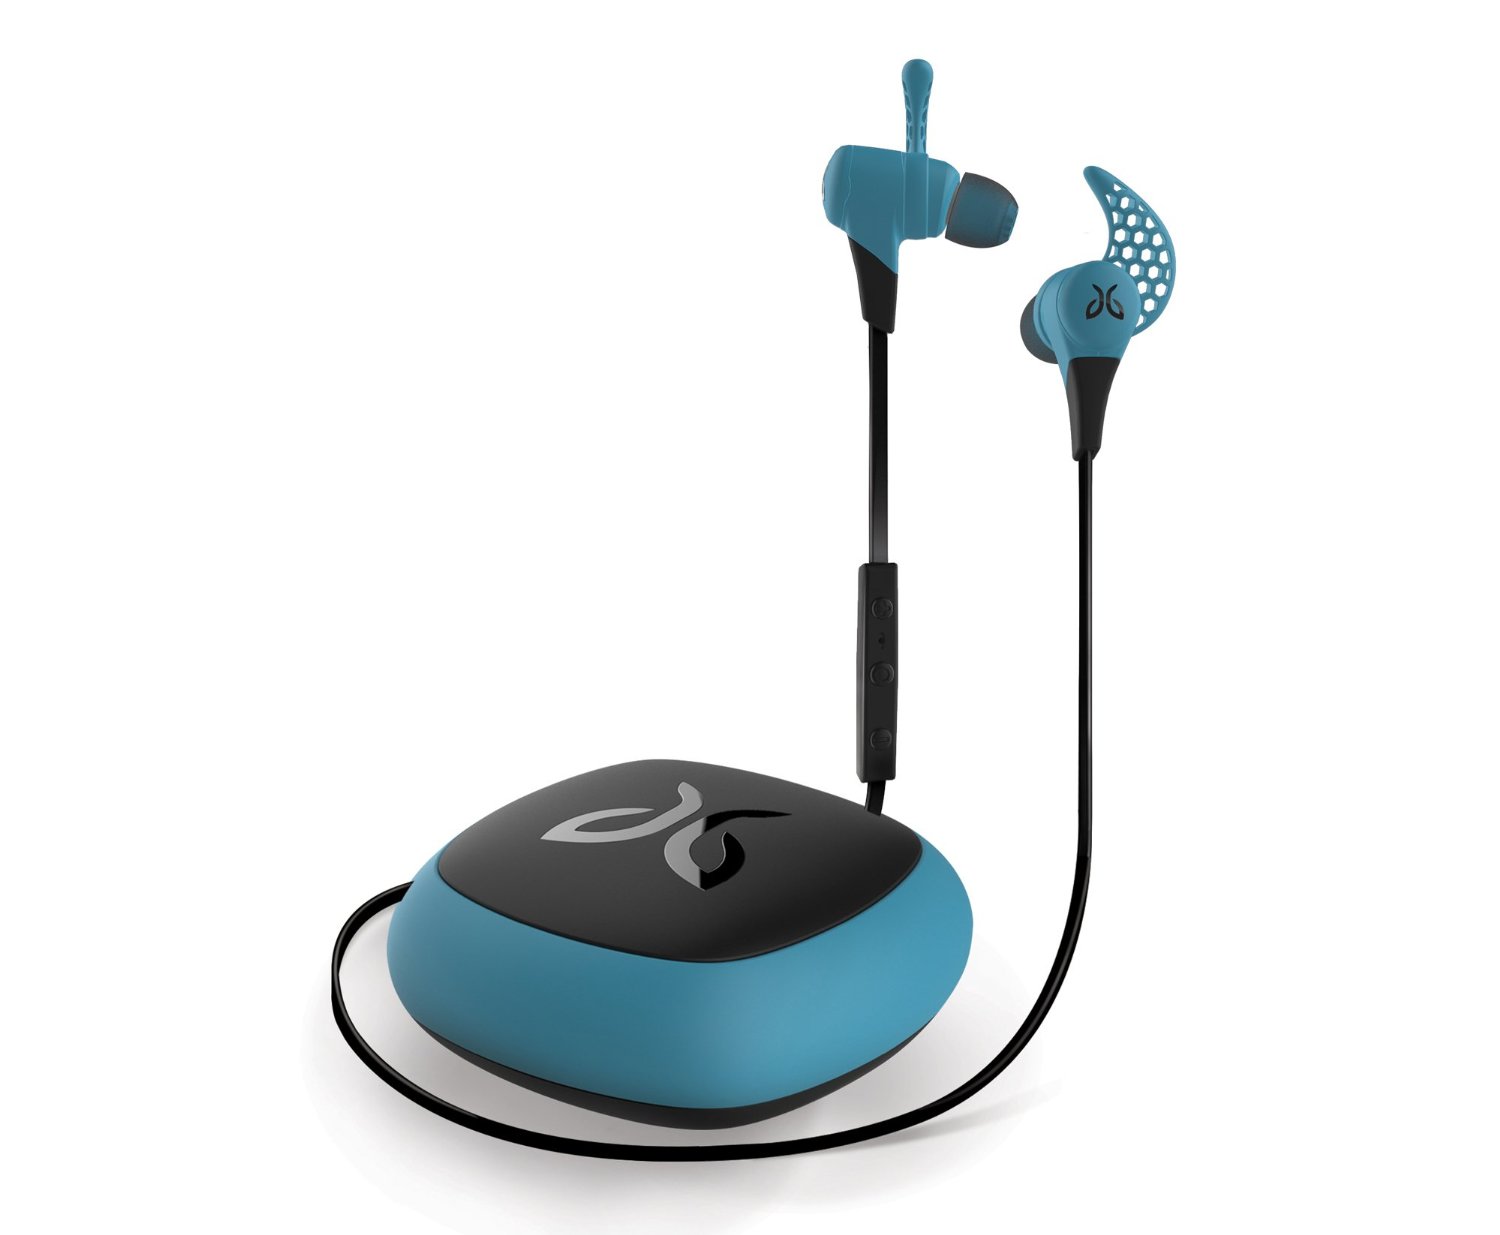 Jaybird X2 sport Bluetooth headphones